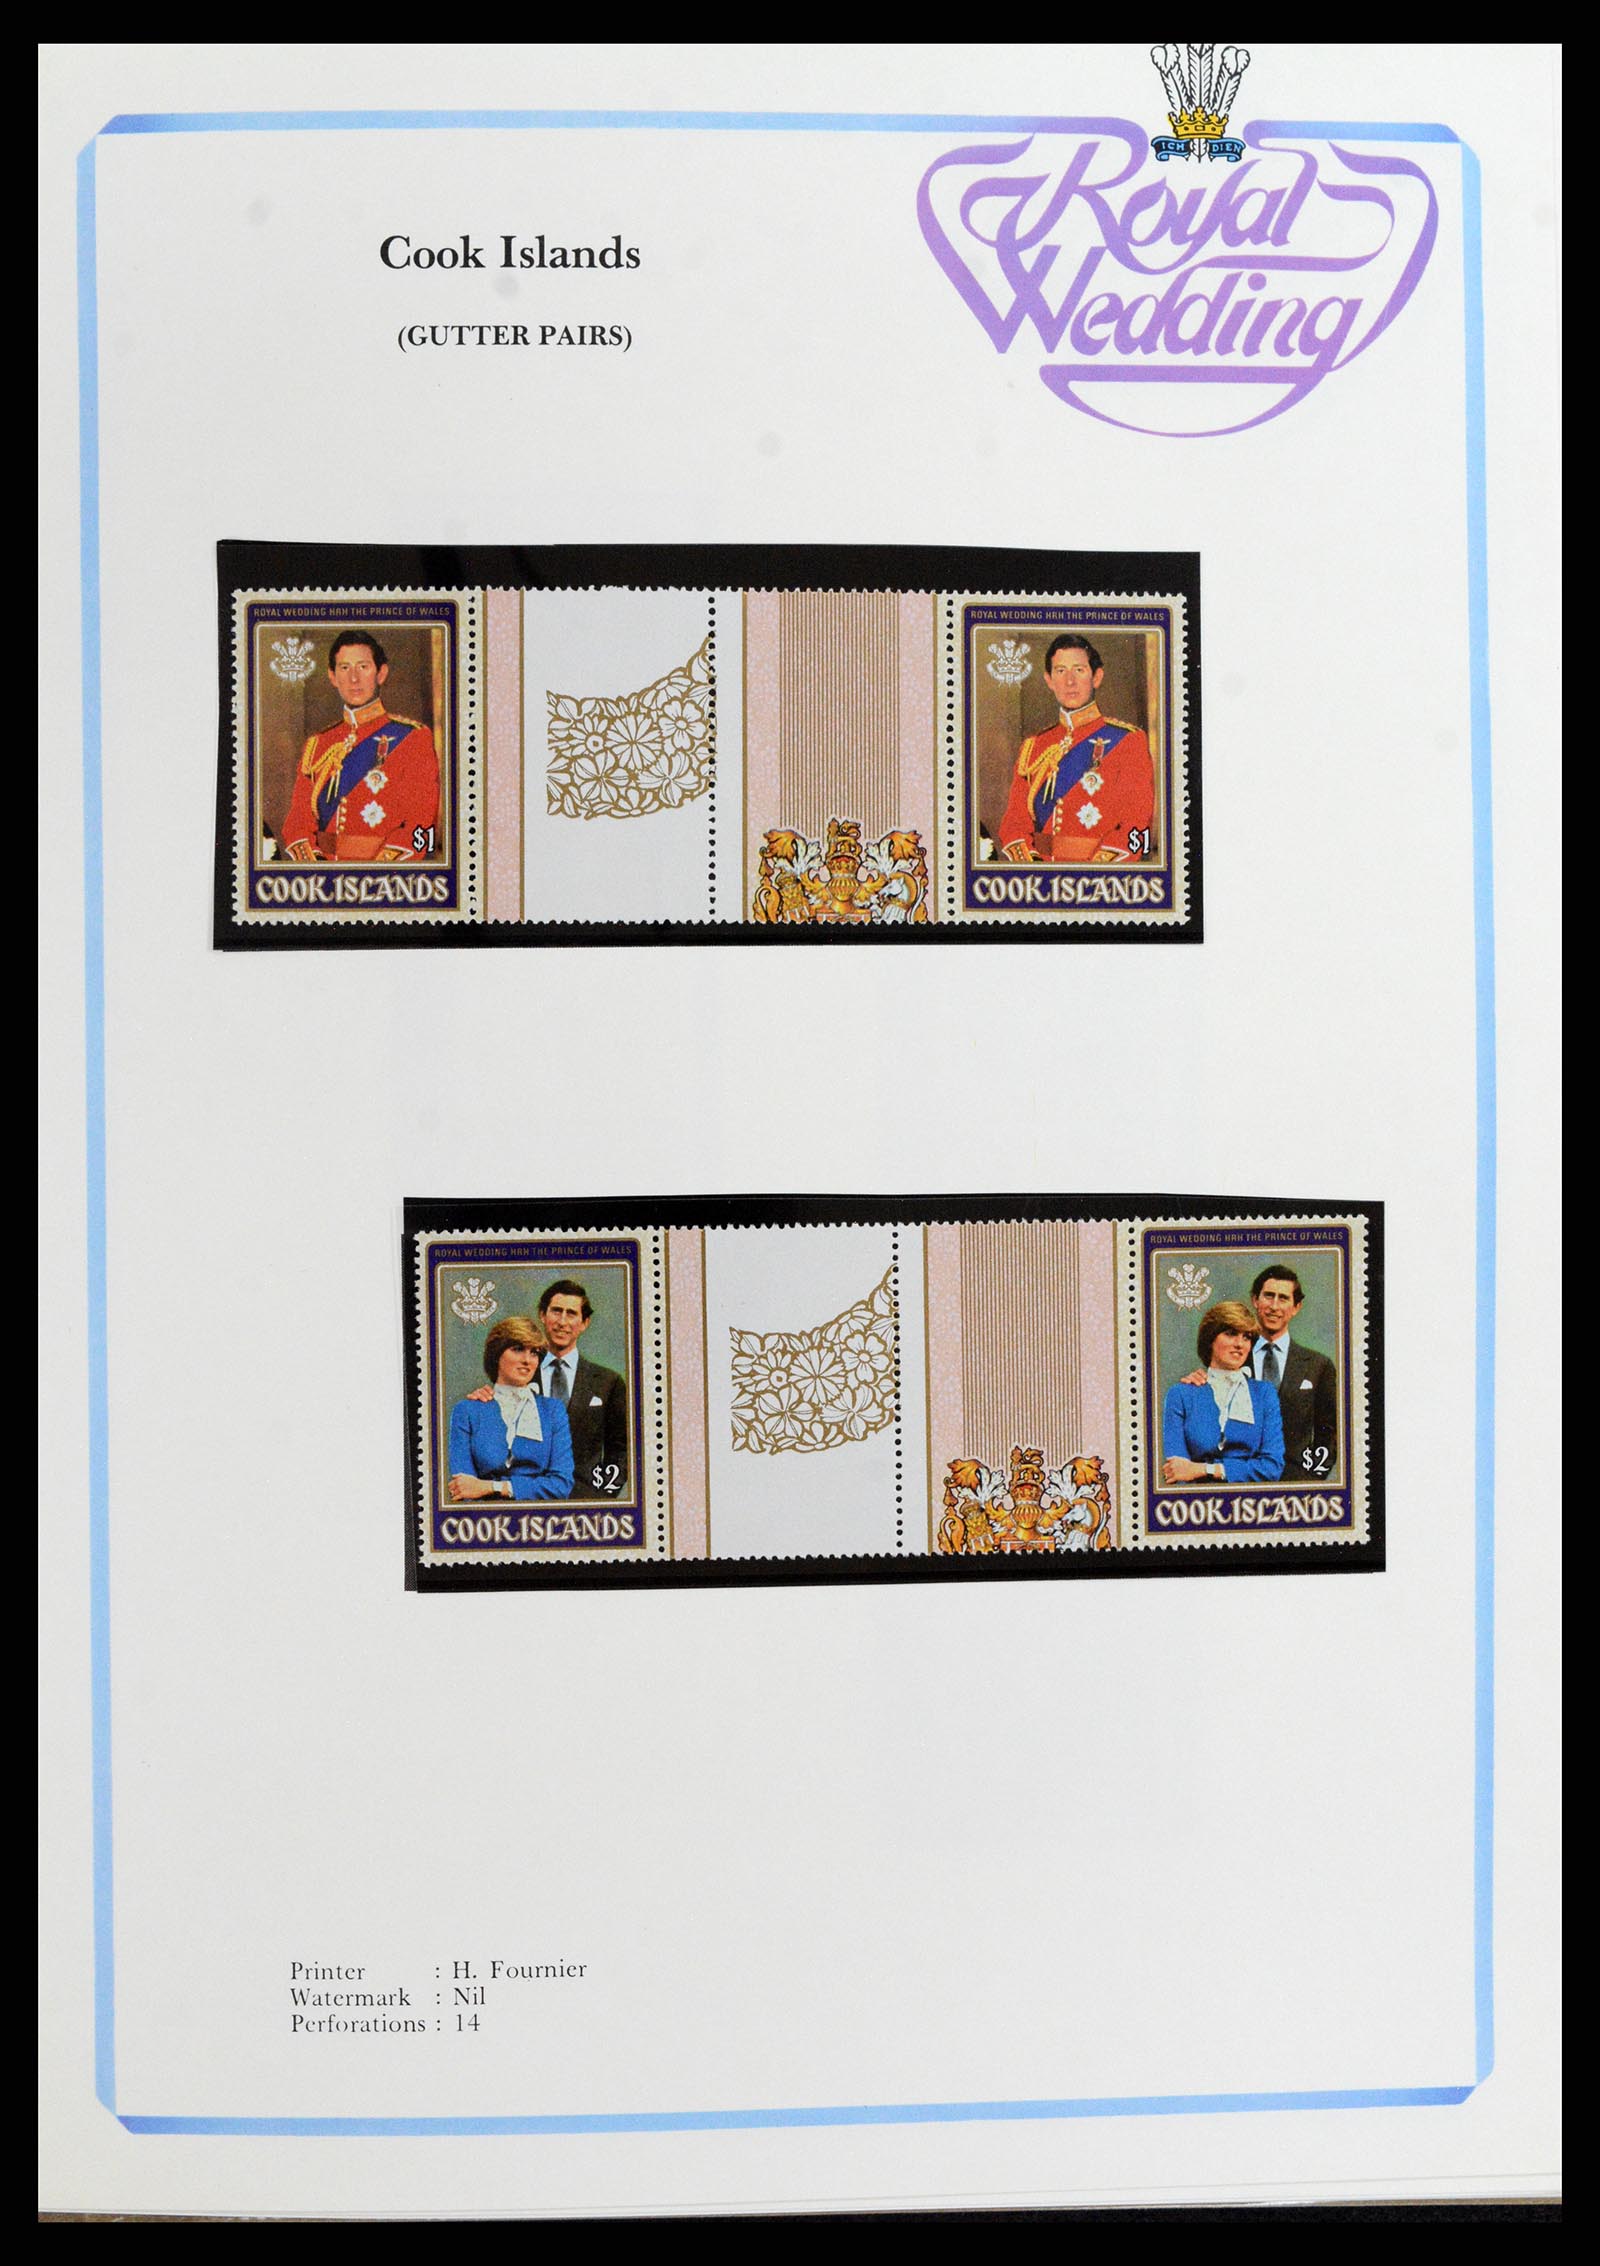 37818 100 - Stamp Collection 37818 Royal Wedding 1981.